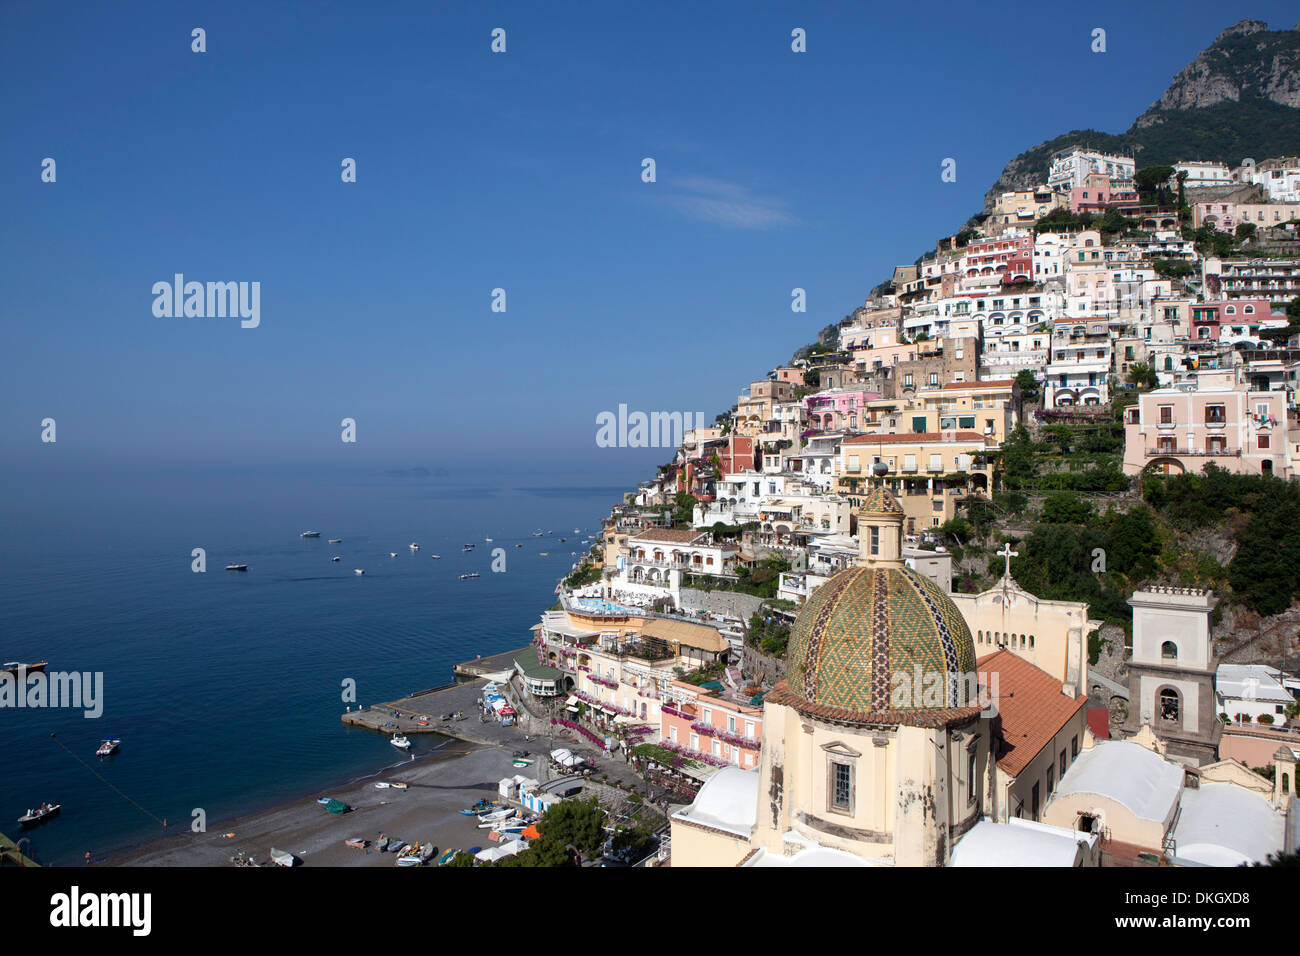 Vista de Positano con la típica cúpula majolica de Santa Maria Assunta, Costiera Amalfitana, sitio UNESCO, Campania, Italia Foto de stock